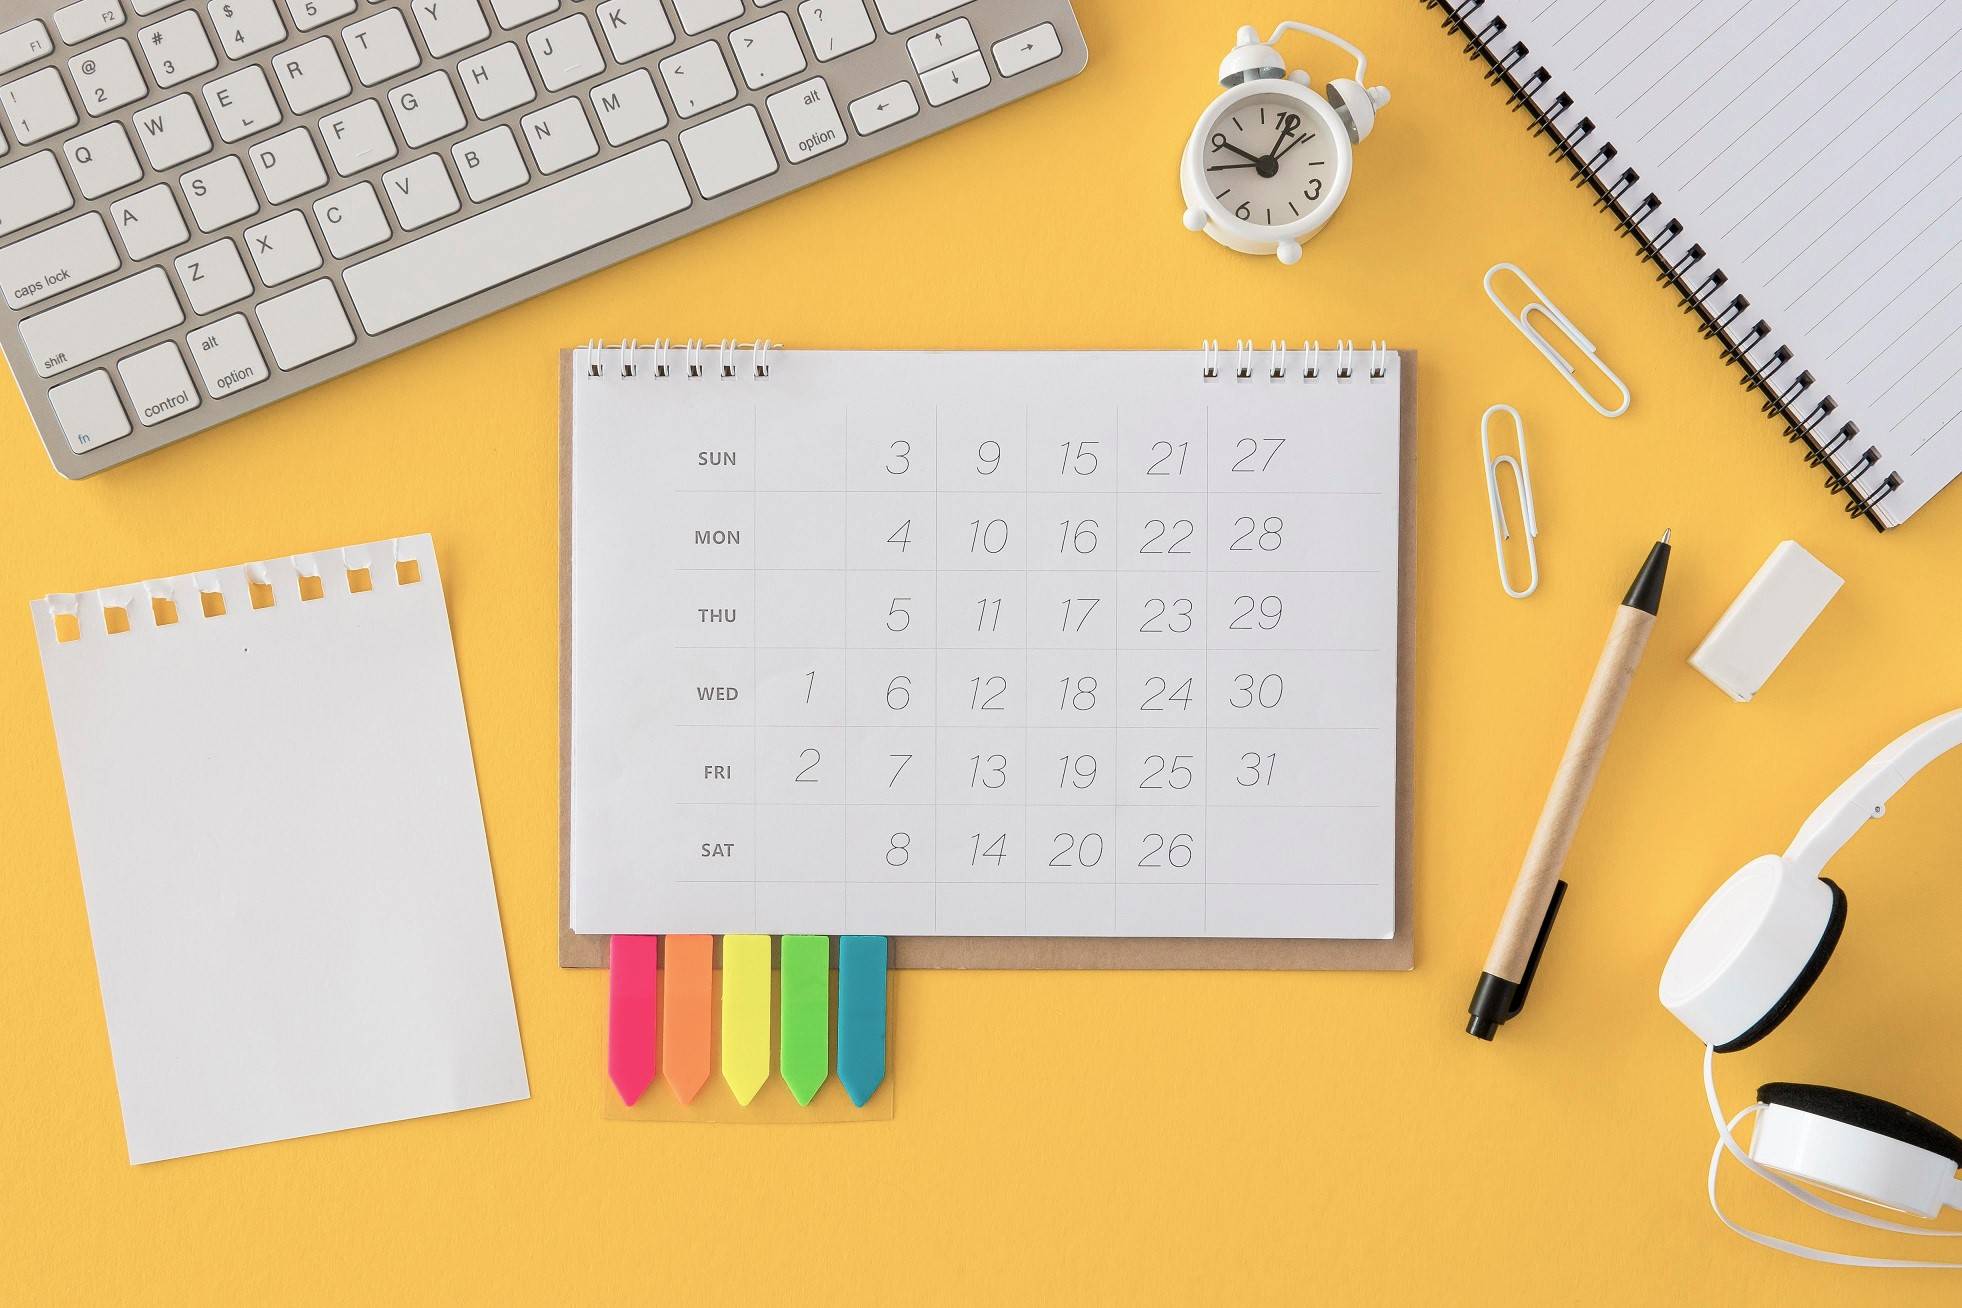 Social media calendar and office supplies on an yellow-orange desk